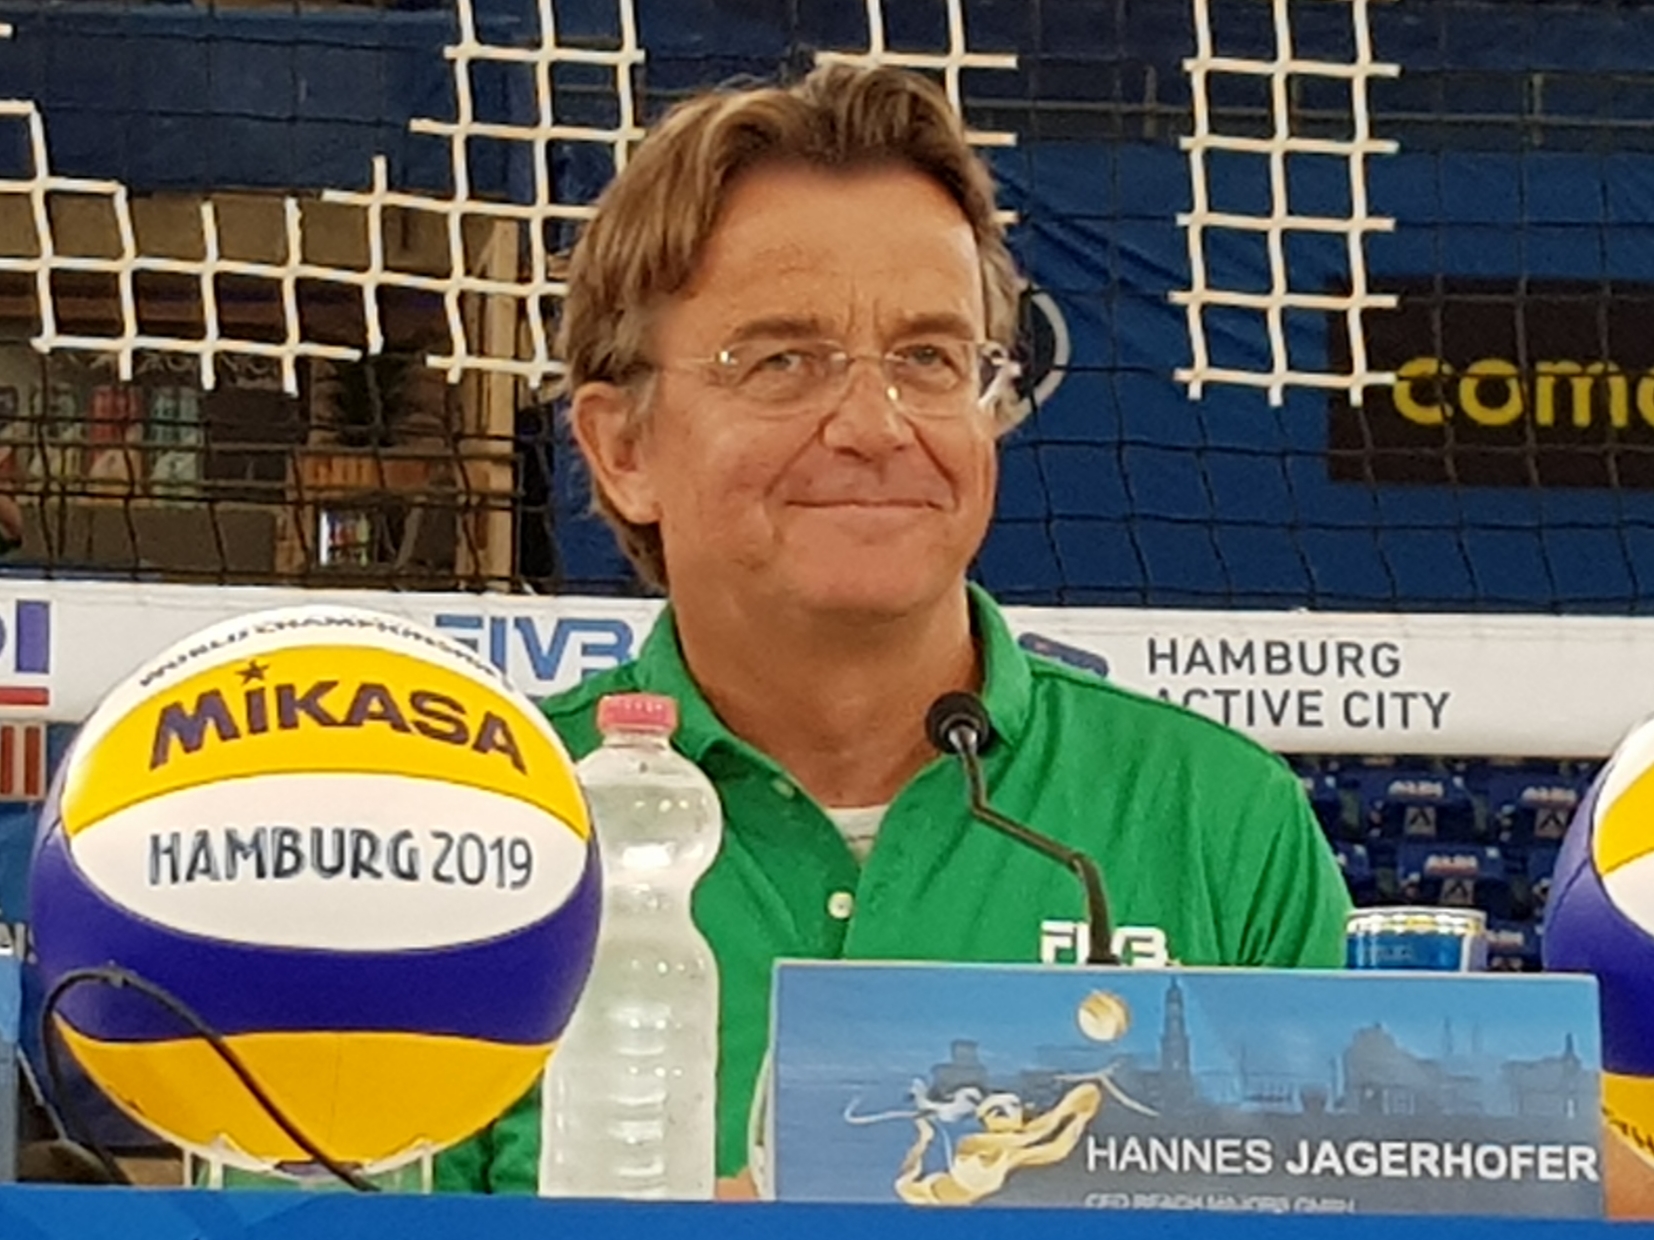 Hannes Jagerhofer